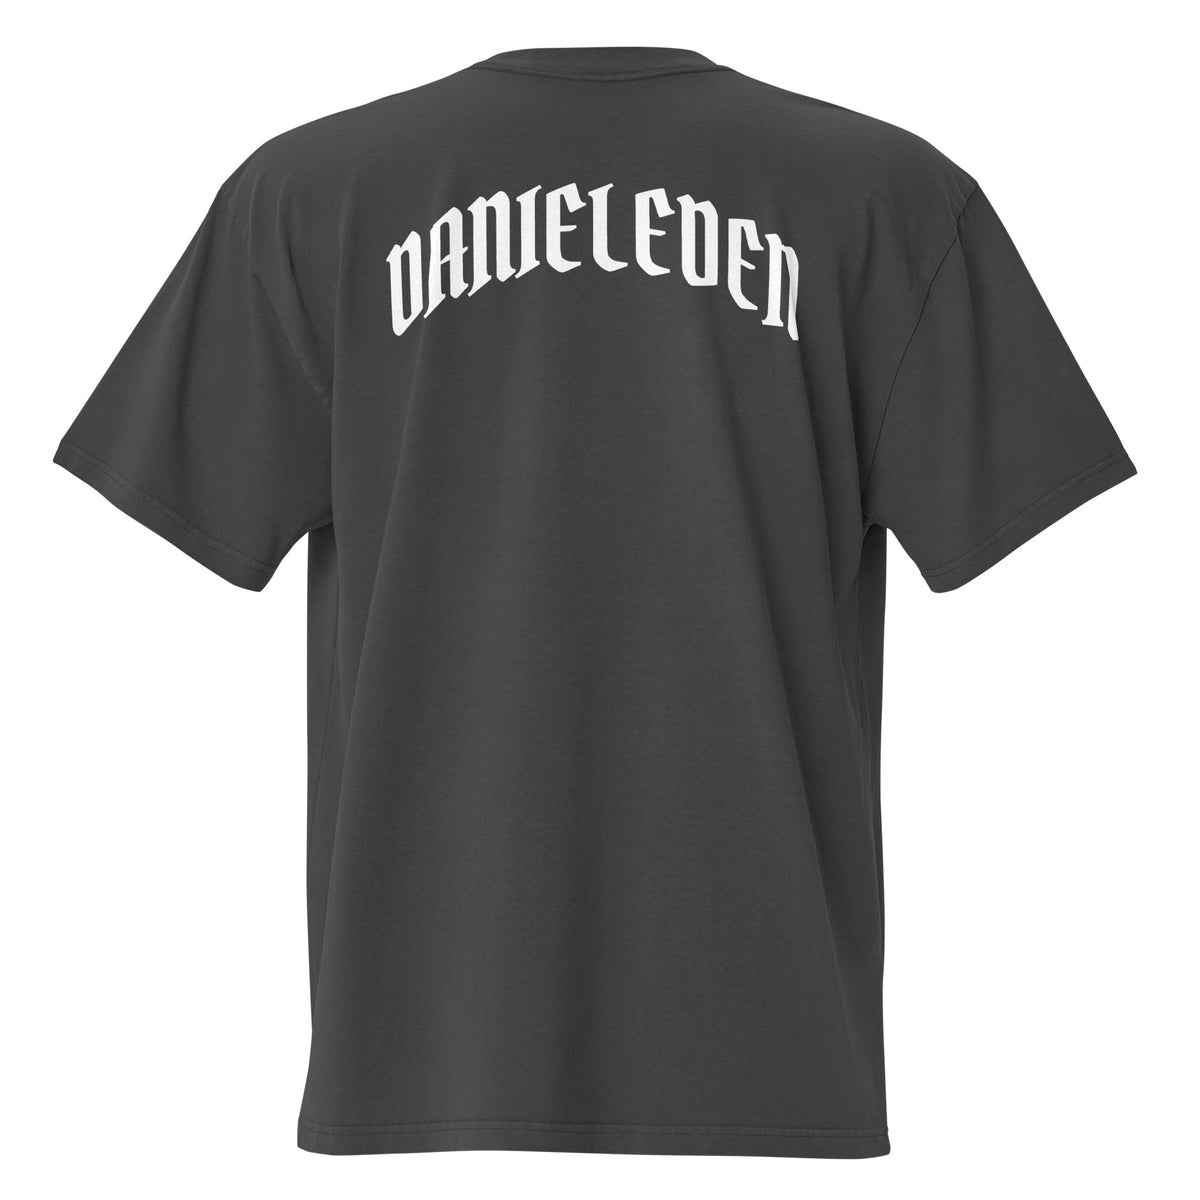 DanielEden Oversized faded t-shirt